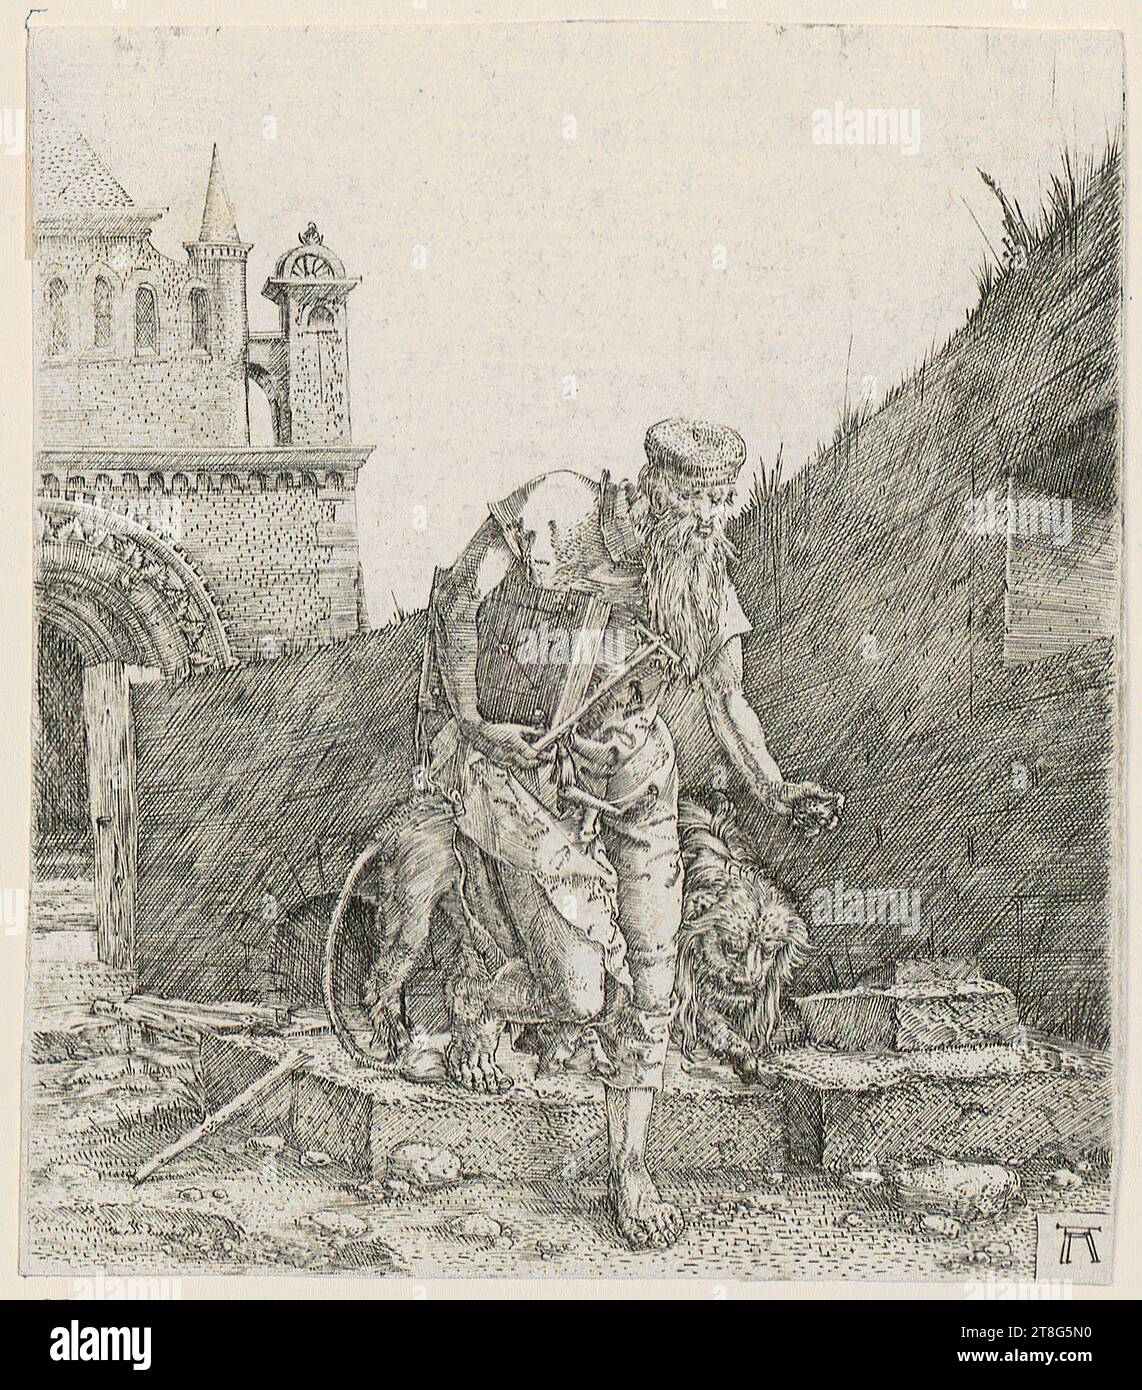 Albrecht Altdorfer (1480 um - 1538), artist, Saint Jerome at the Wall, print medium: circa 1512 - 1515, copperplate engraving, sheet size: 12.0 x 10.5 cm, bottom right monogrammed 'AA Stock Photo